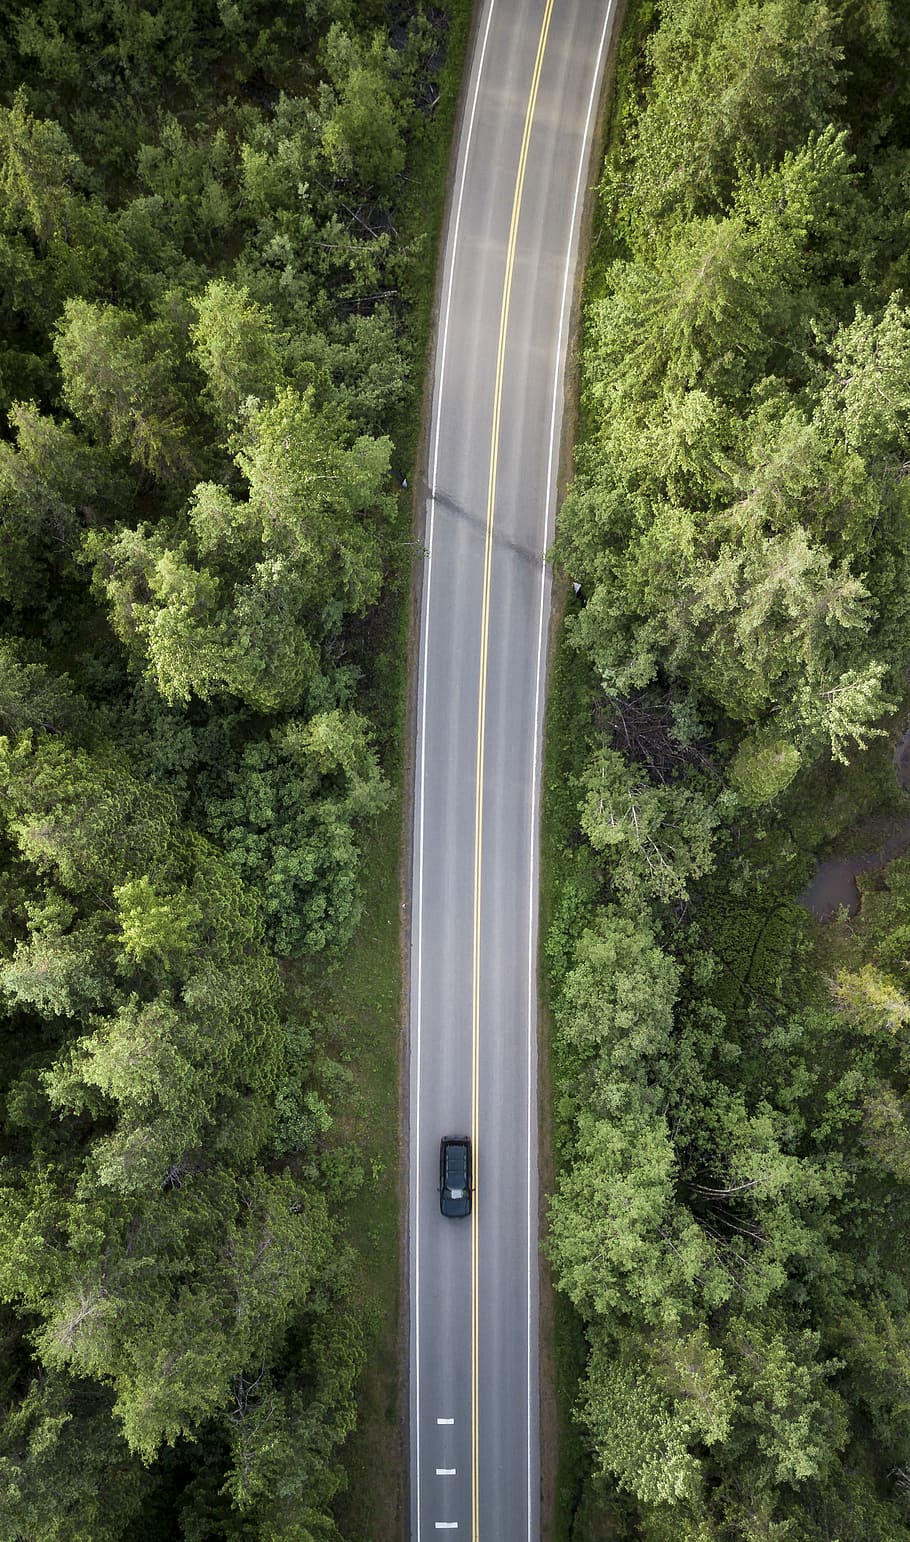 aerial view of black vehicle on gray asphalt road during daytime, car on grey asphalt road in between green trees